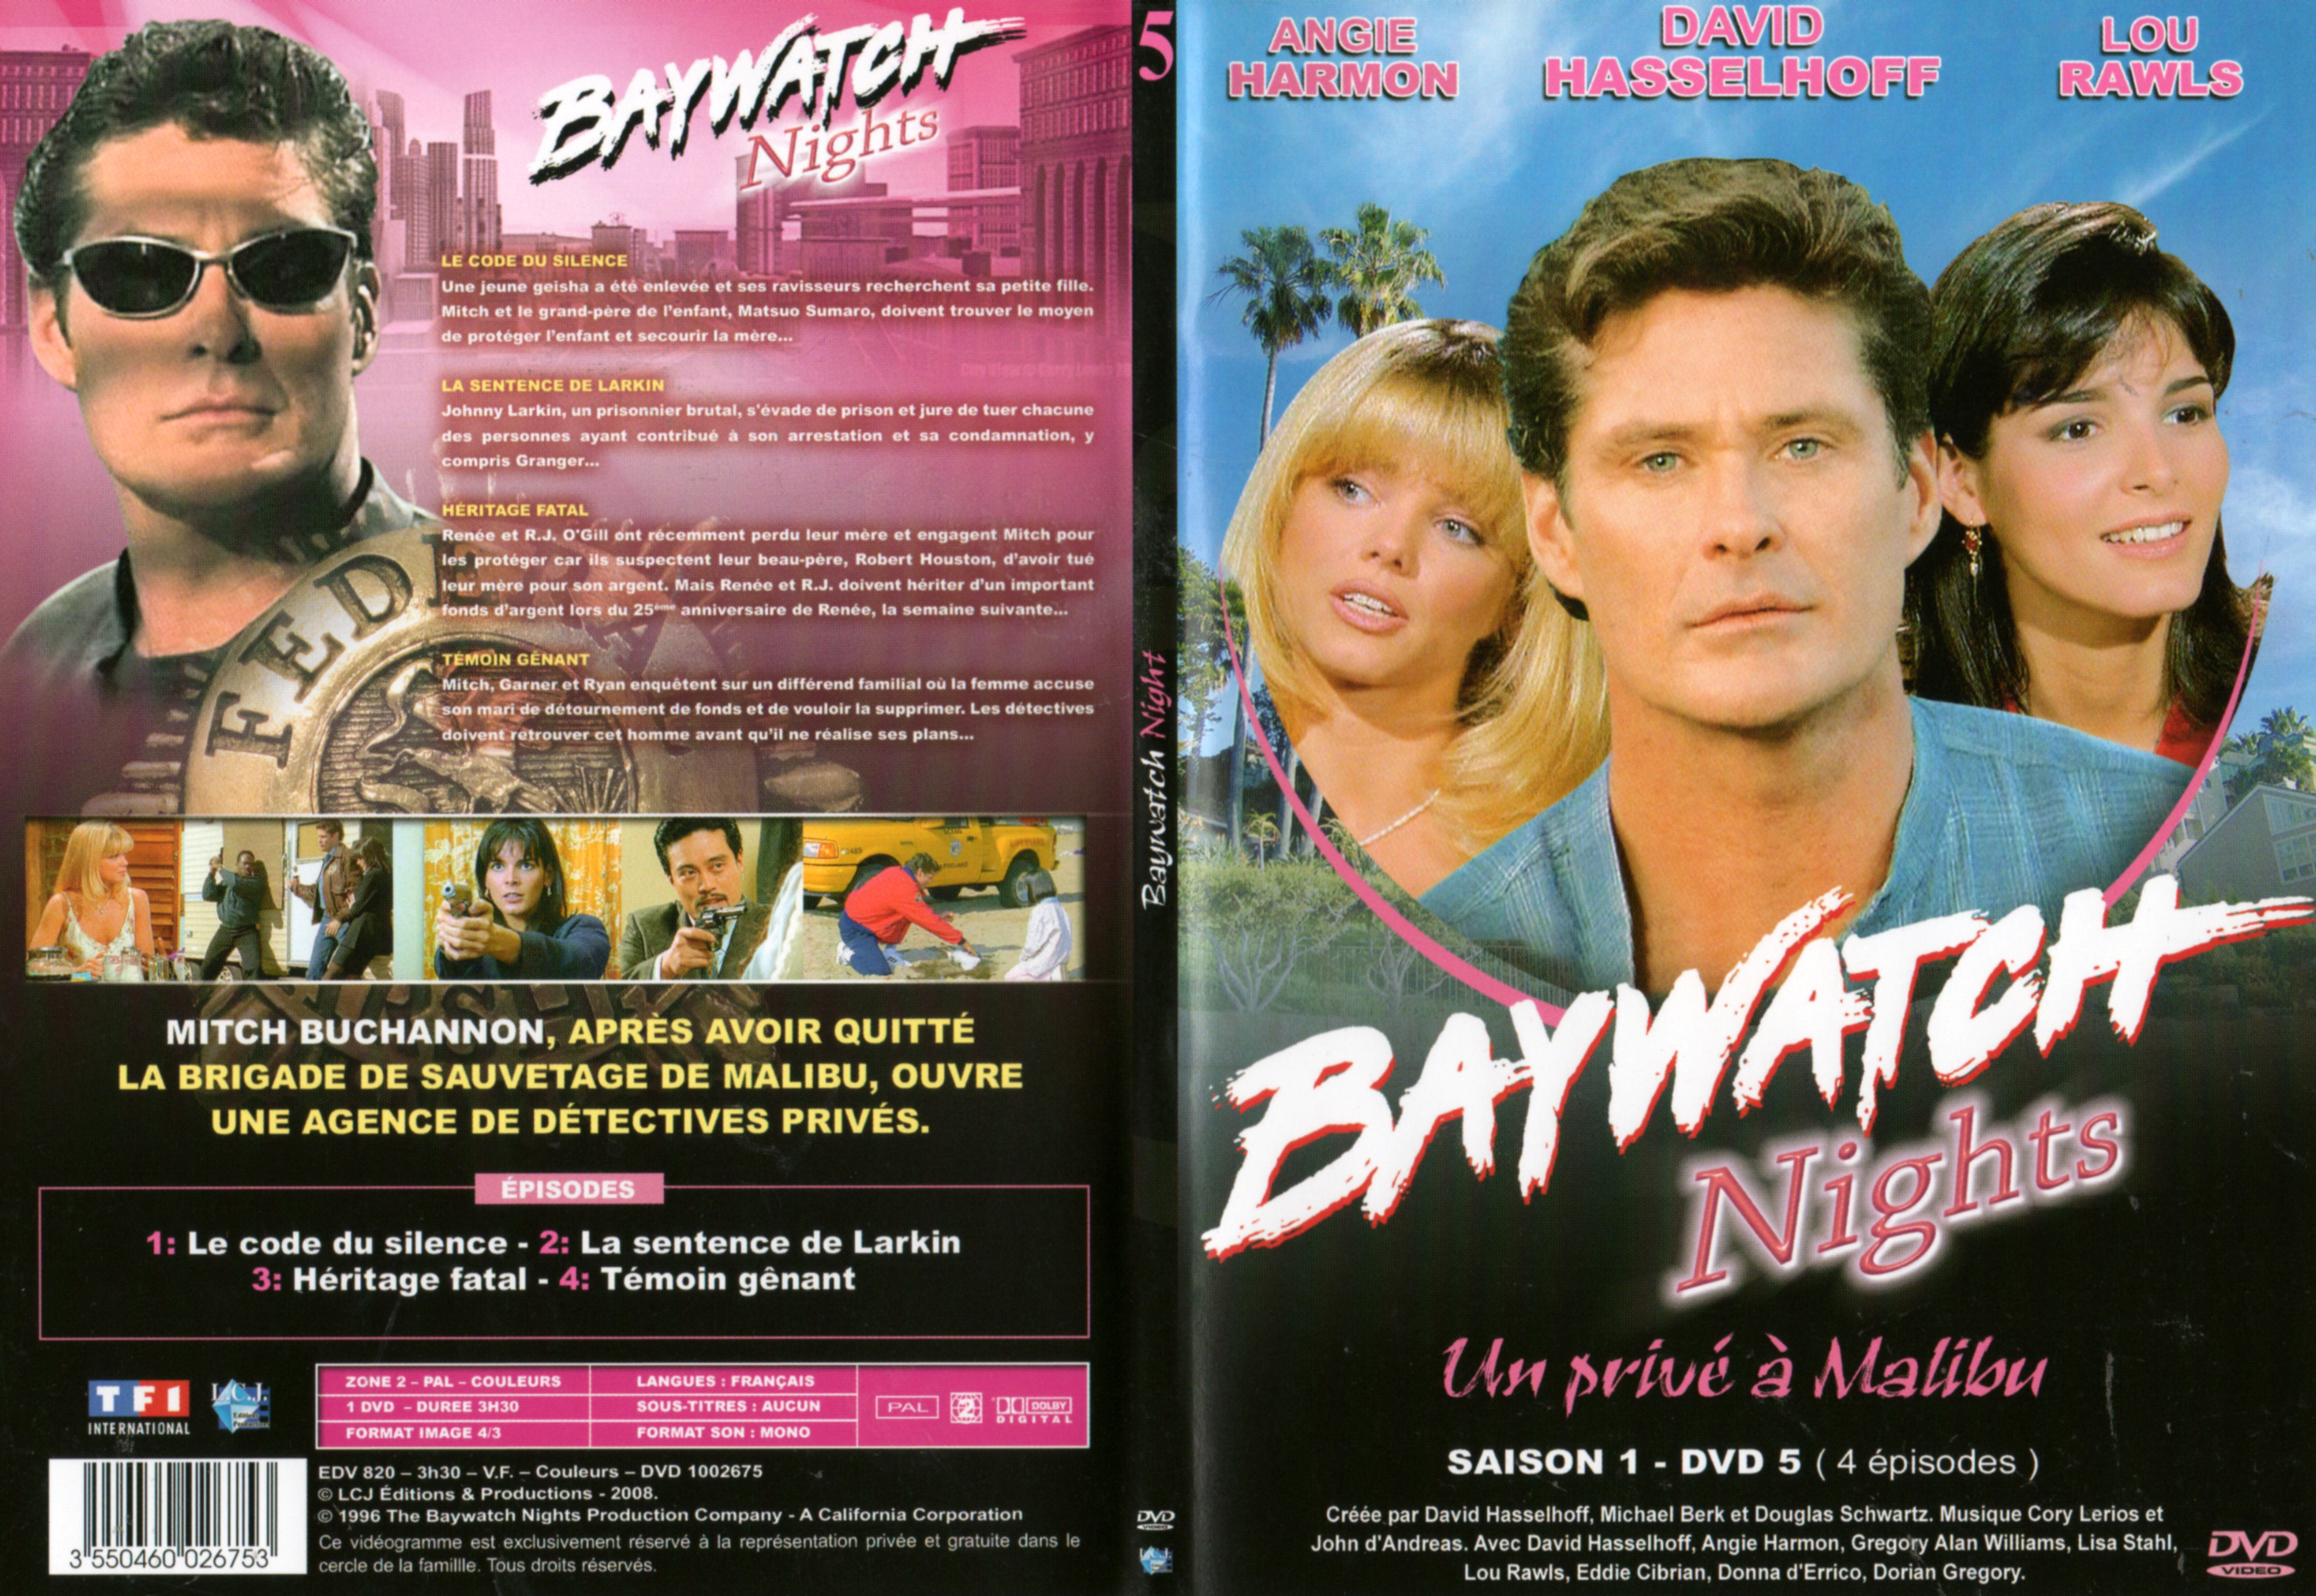 Jaquette DVD Baywatch nights Saison 1 DISC 5